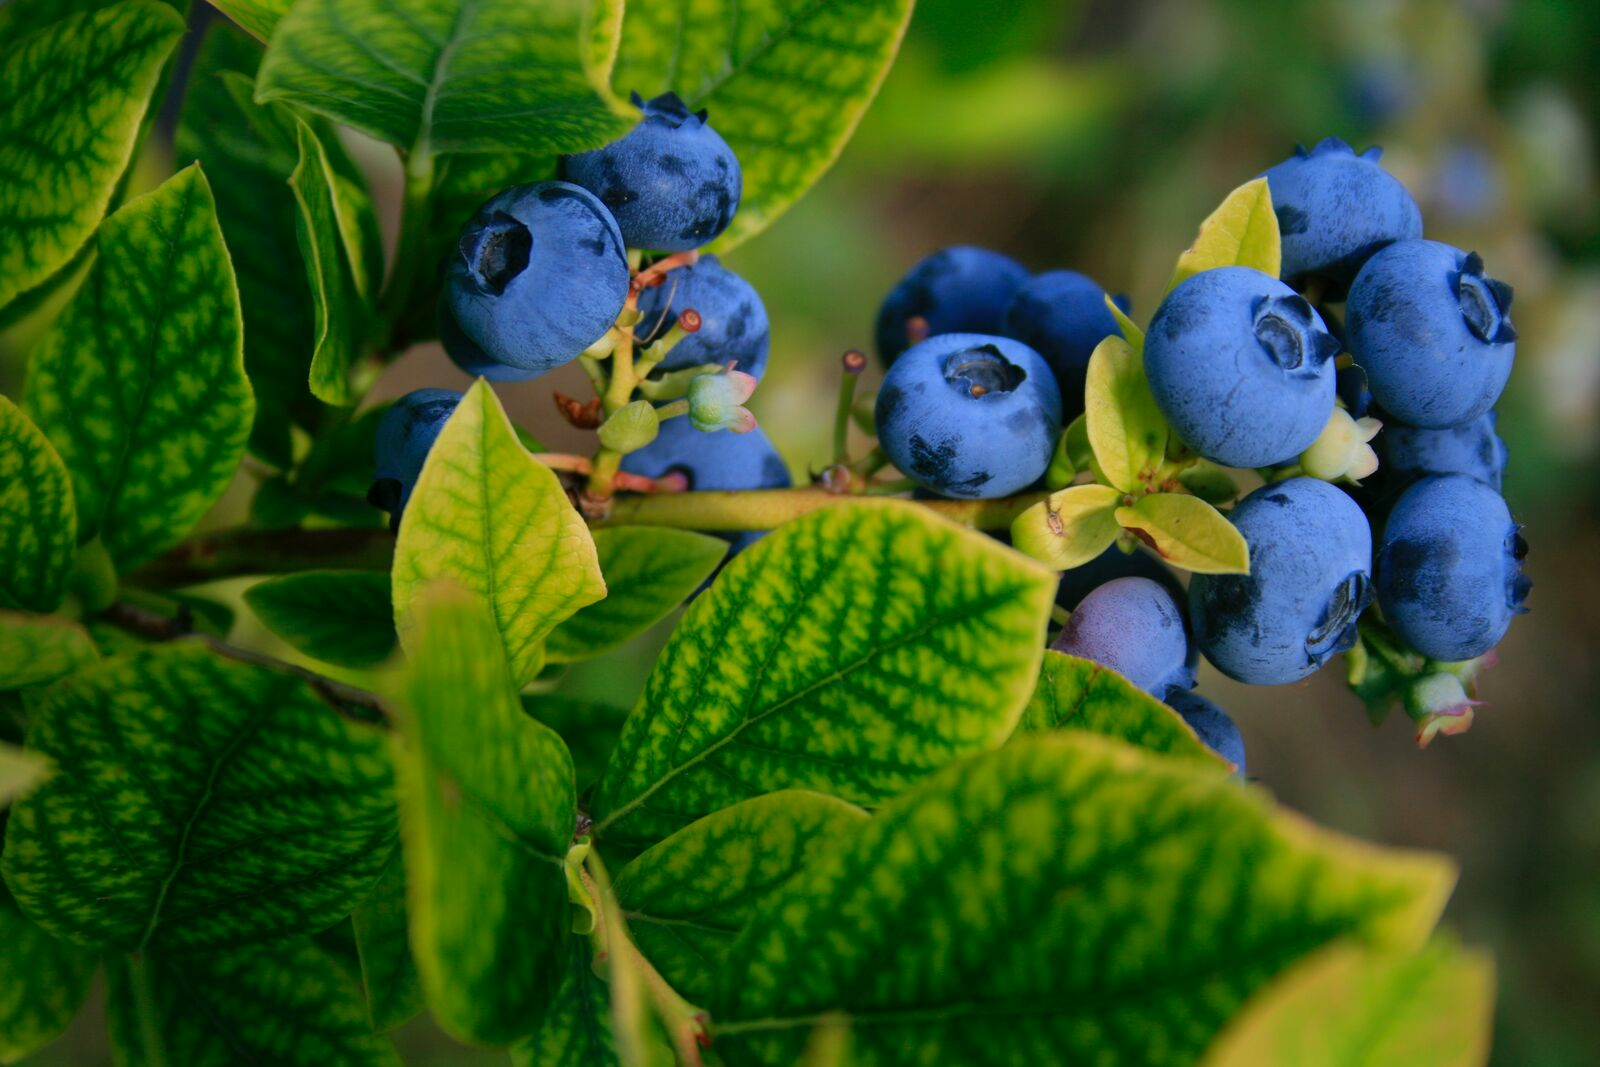 Planting blueberries: Cultivation, care & harvest